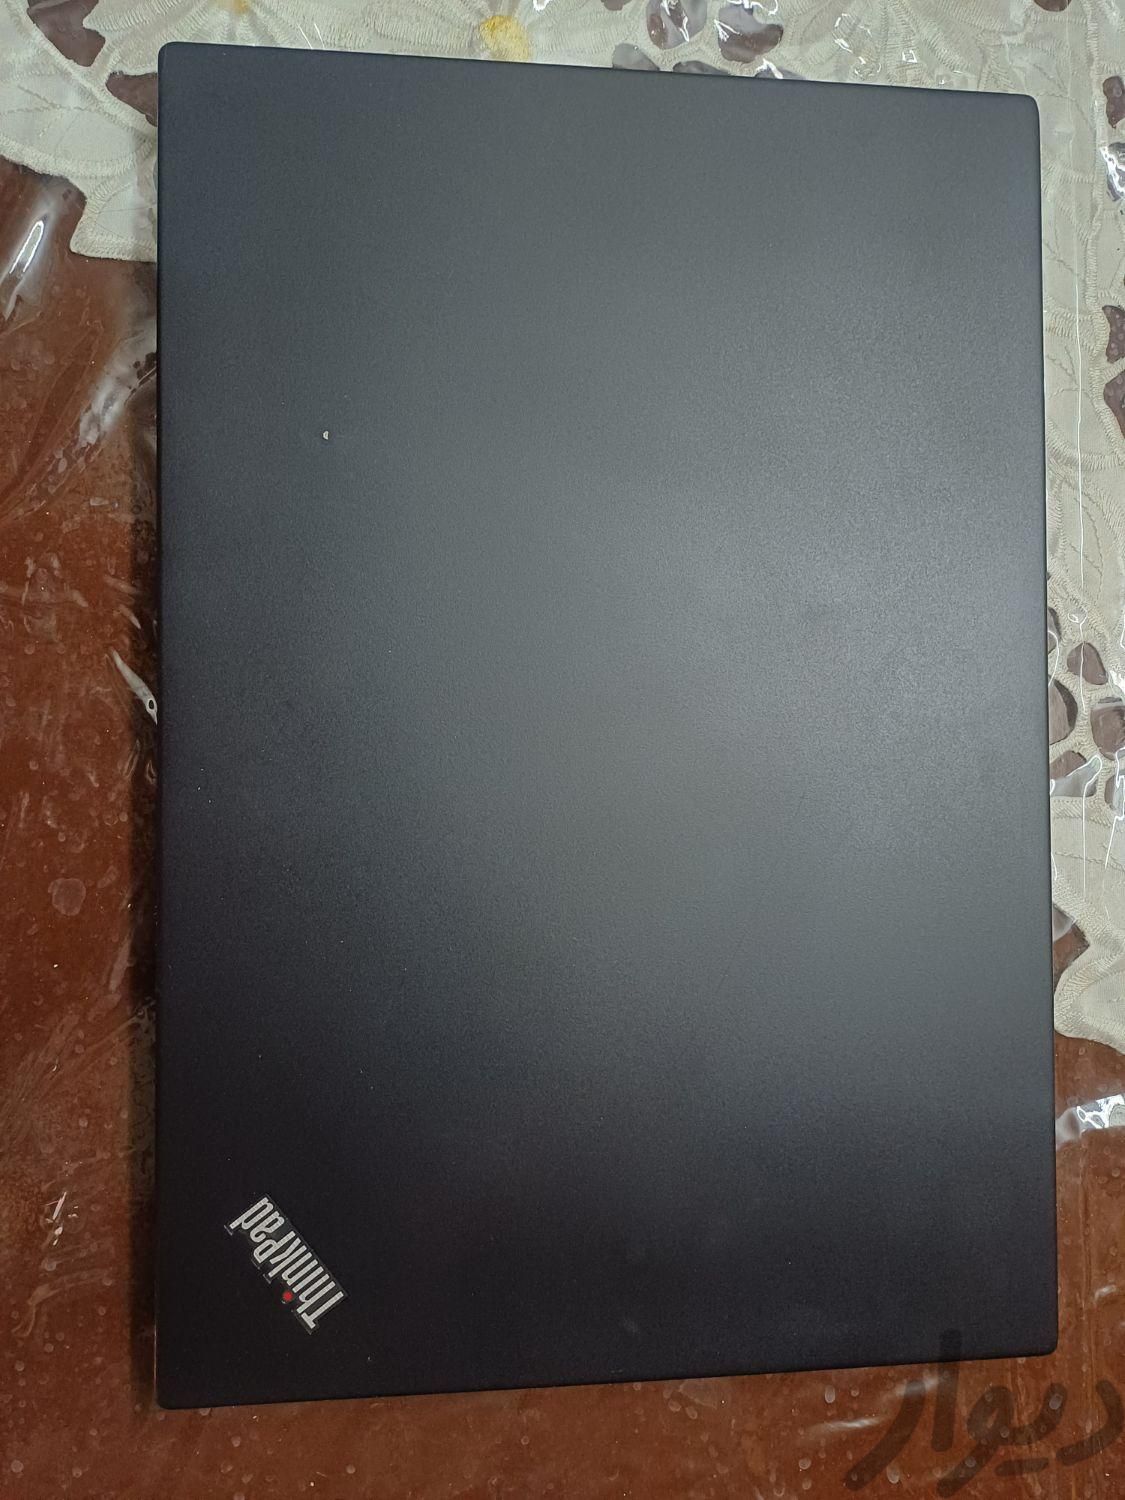 لپ تاپ لنوو T460s سالم i5 ram8|رایانه همراه|تهران, آذربایجان|دیوار